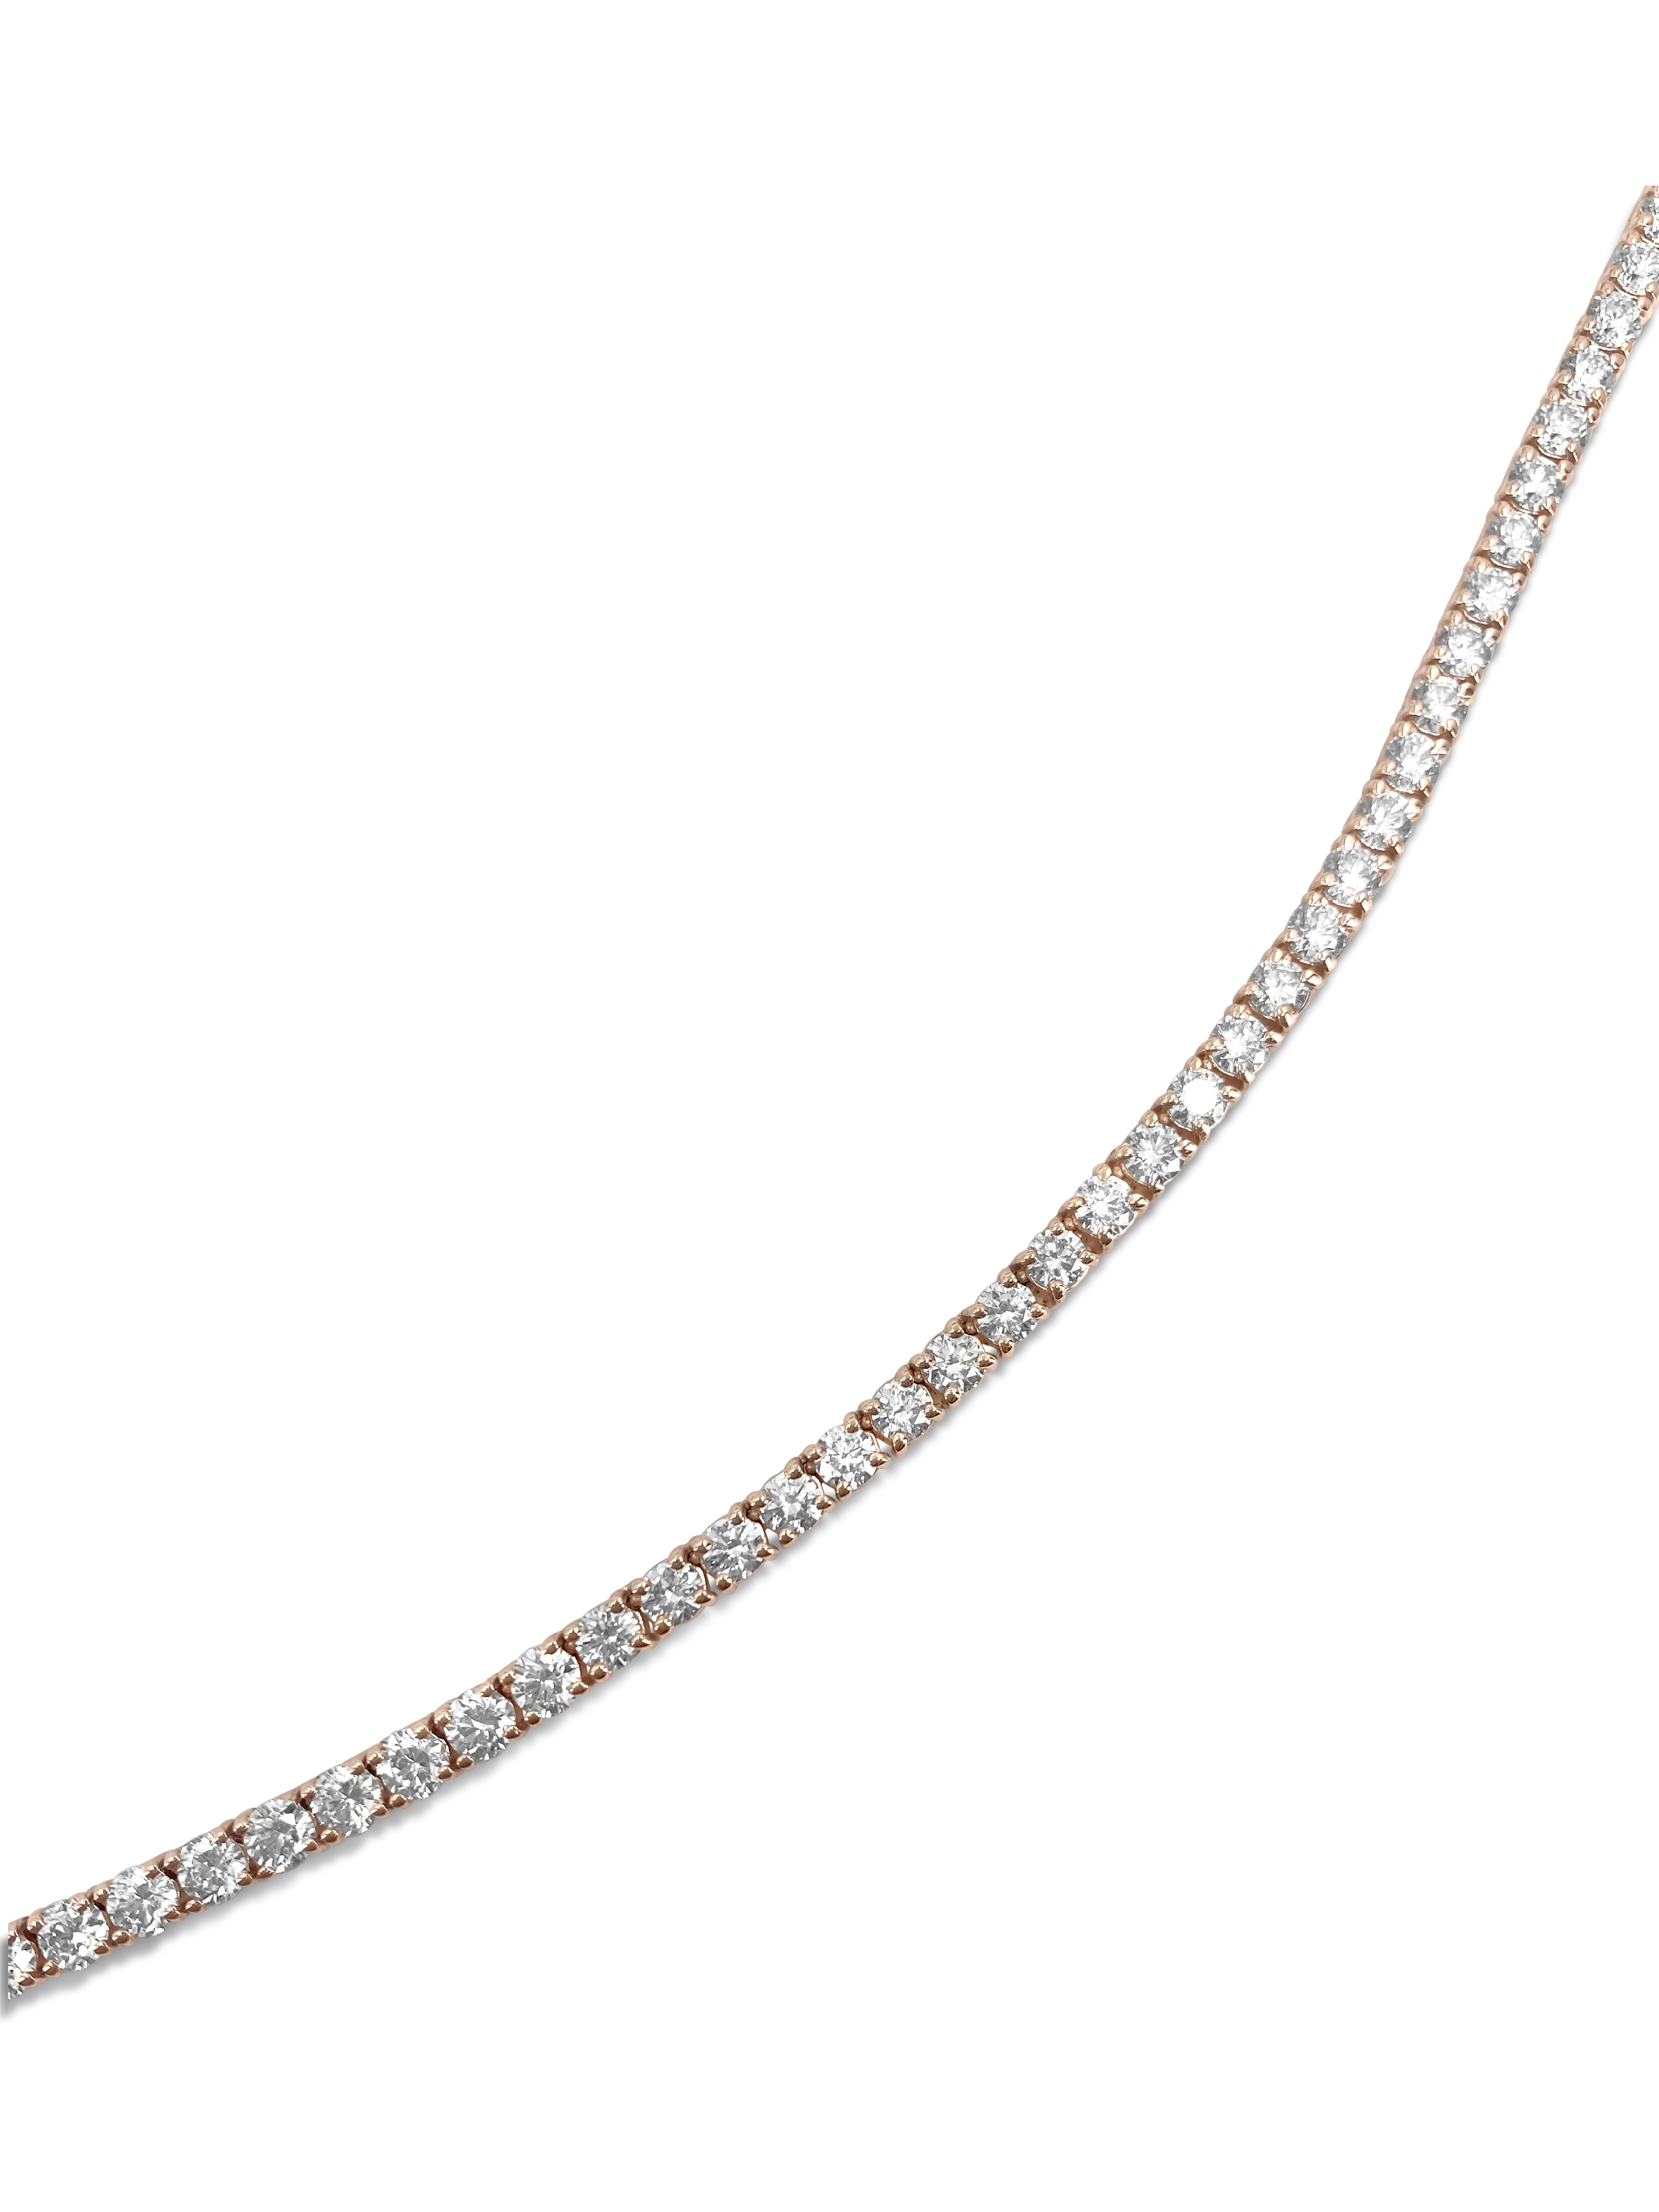 Round Cut 18ct Diamond Tennis Necklace. VVS Diamonds in 10k Gold For Sale